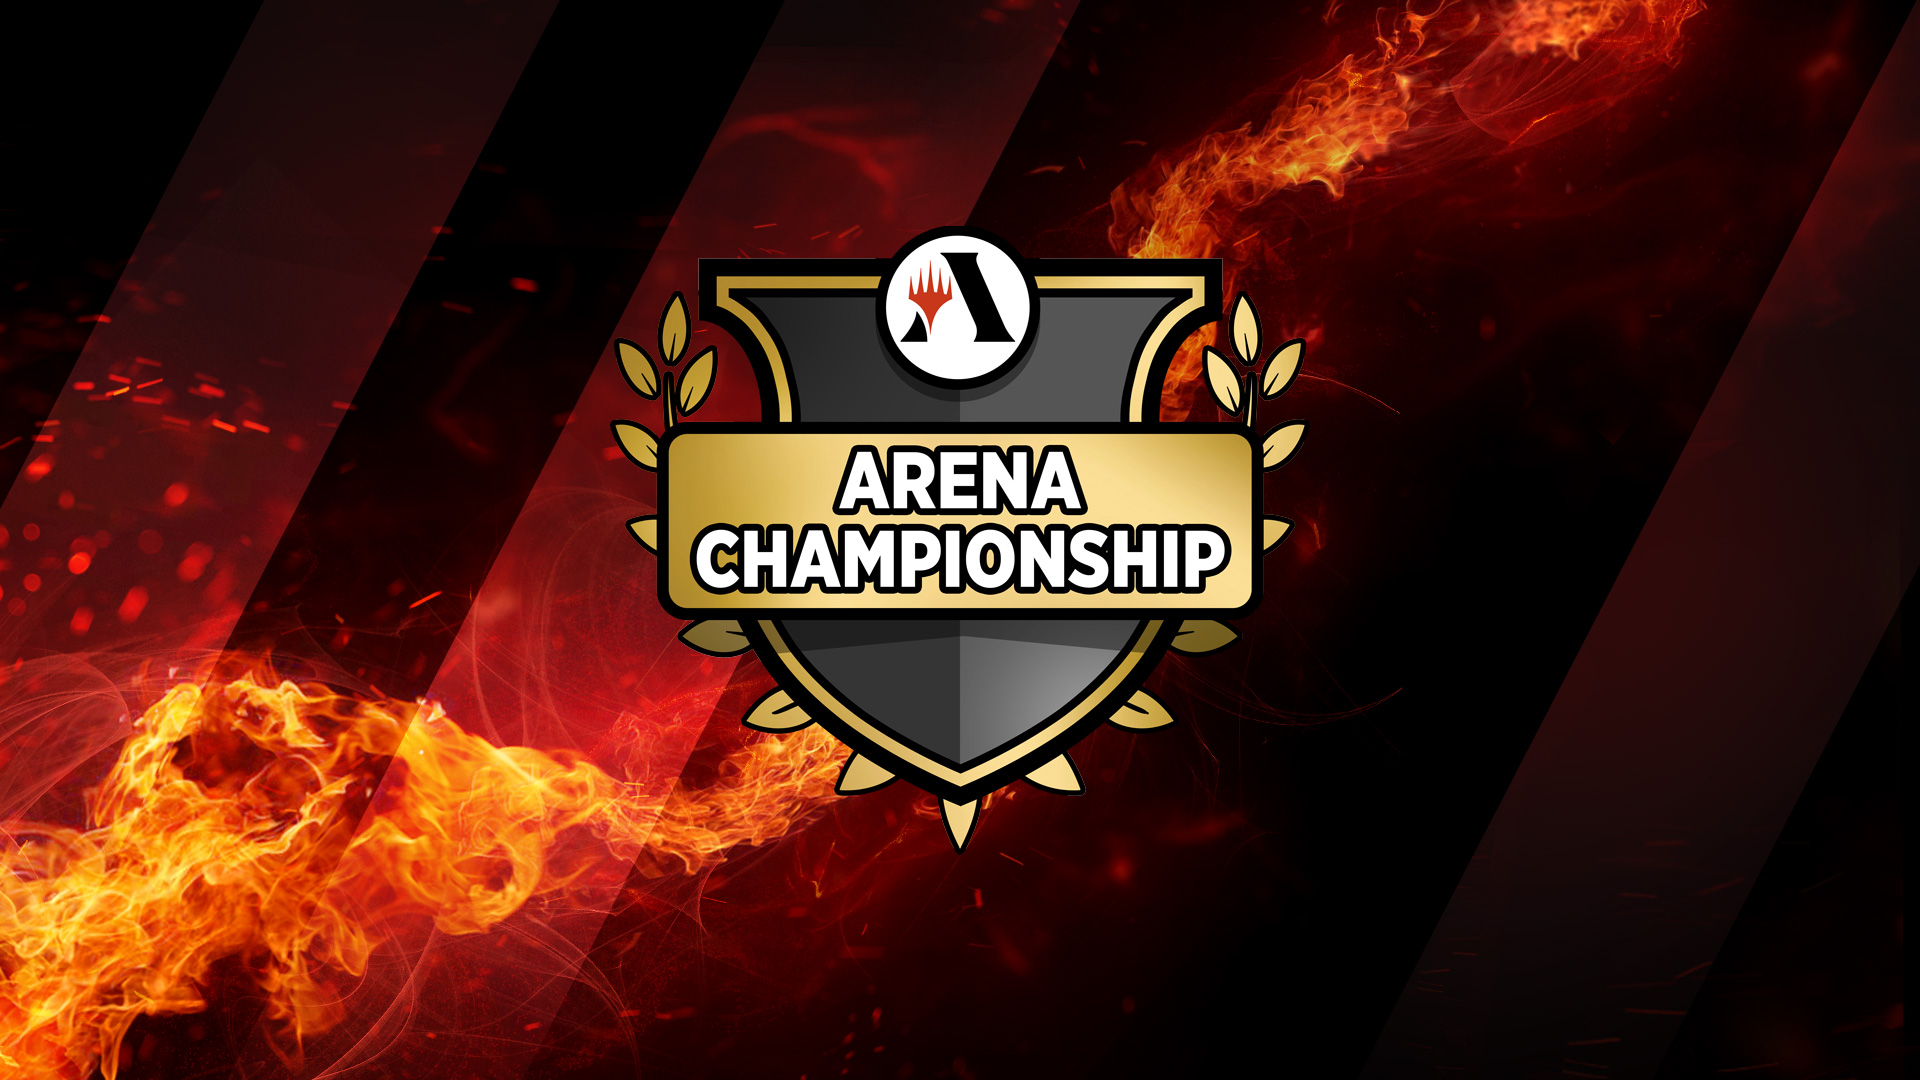 logo_1920x1080_arena_championship_red.jpg